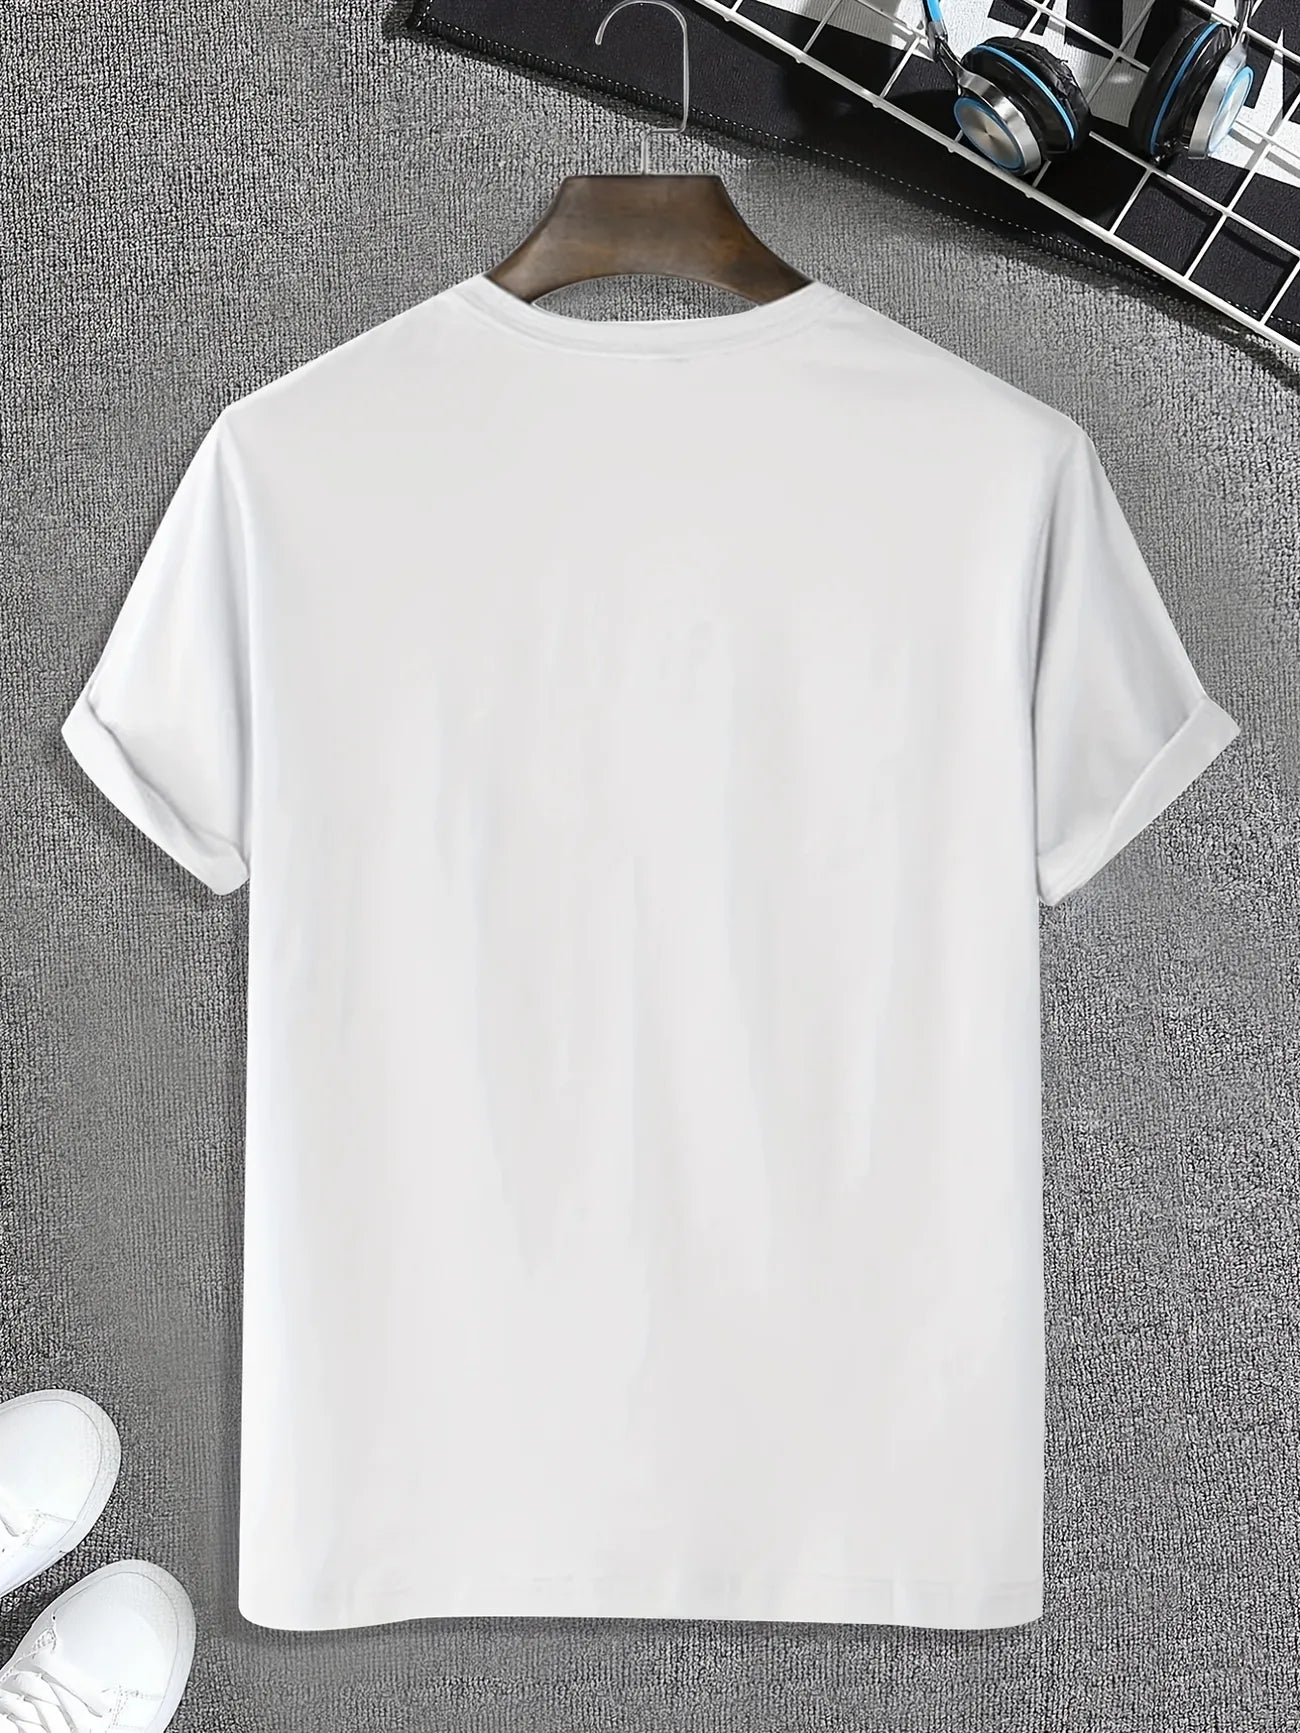 Mens Cotton Sticker Printed T-Shirt TTMPS87 - White